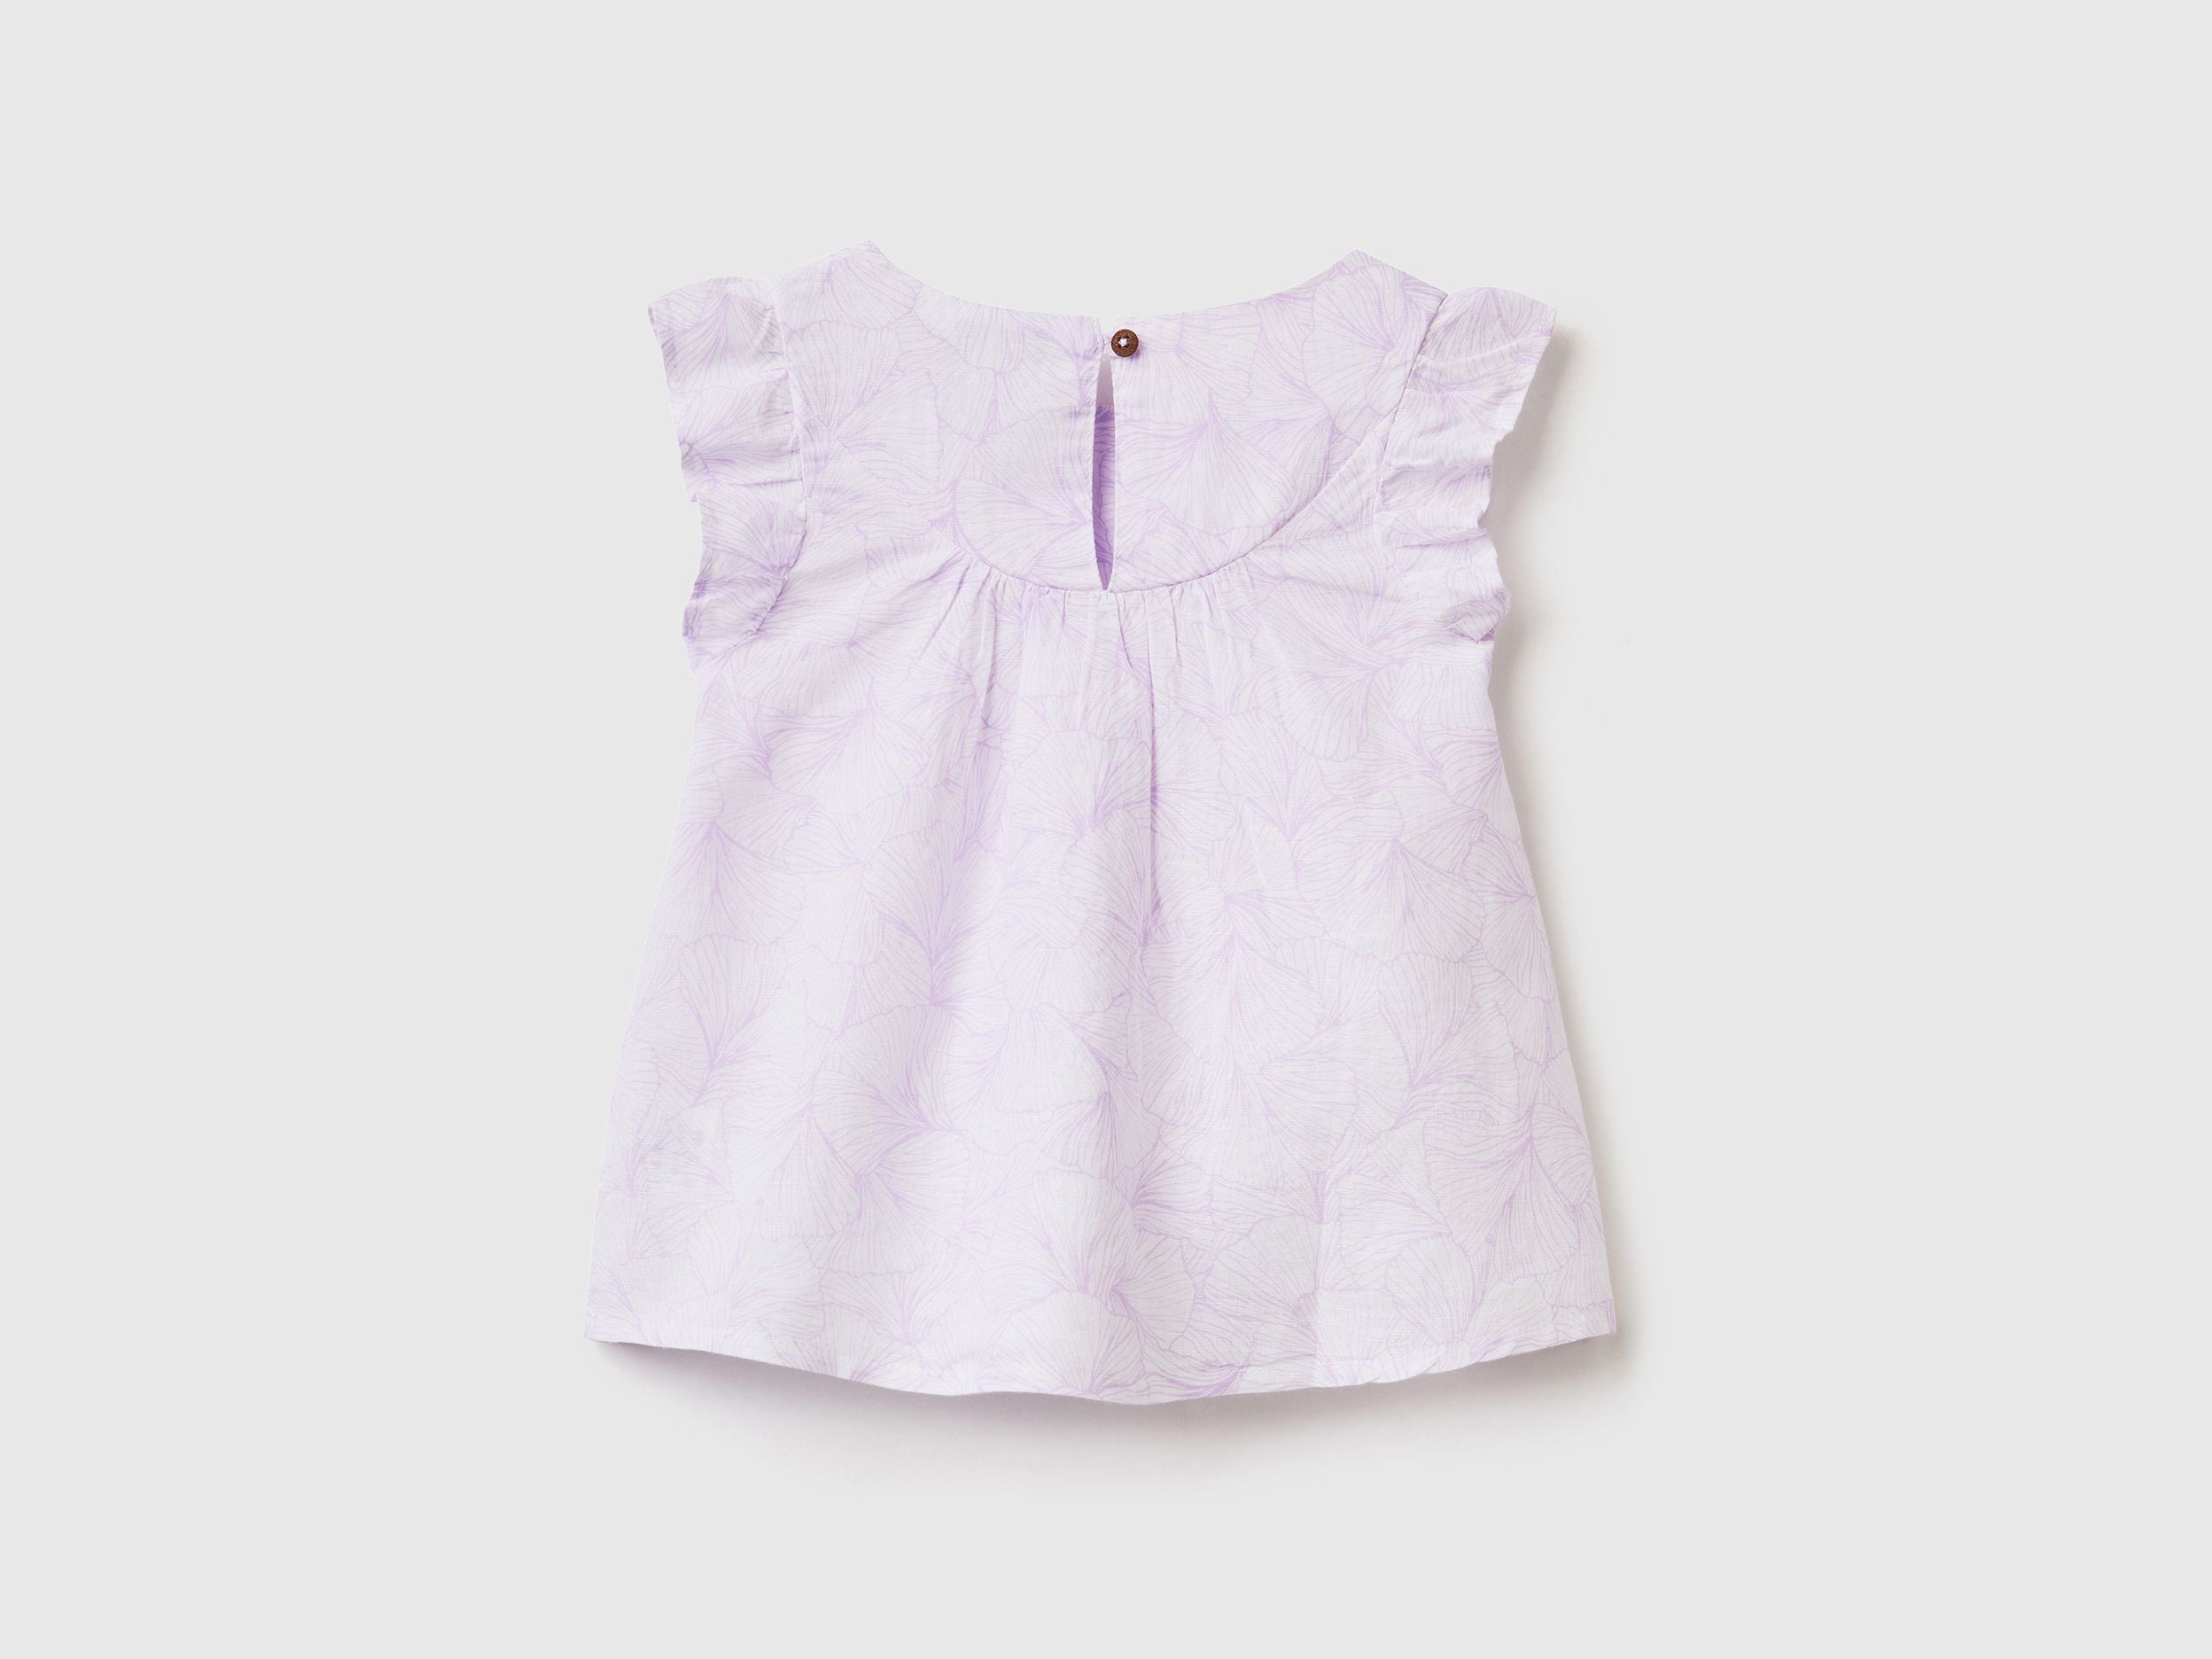 Patterned blouse in linen blend